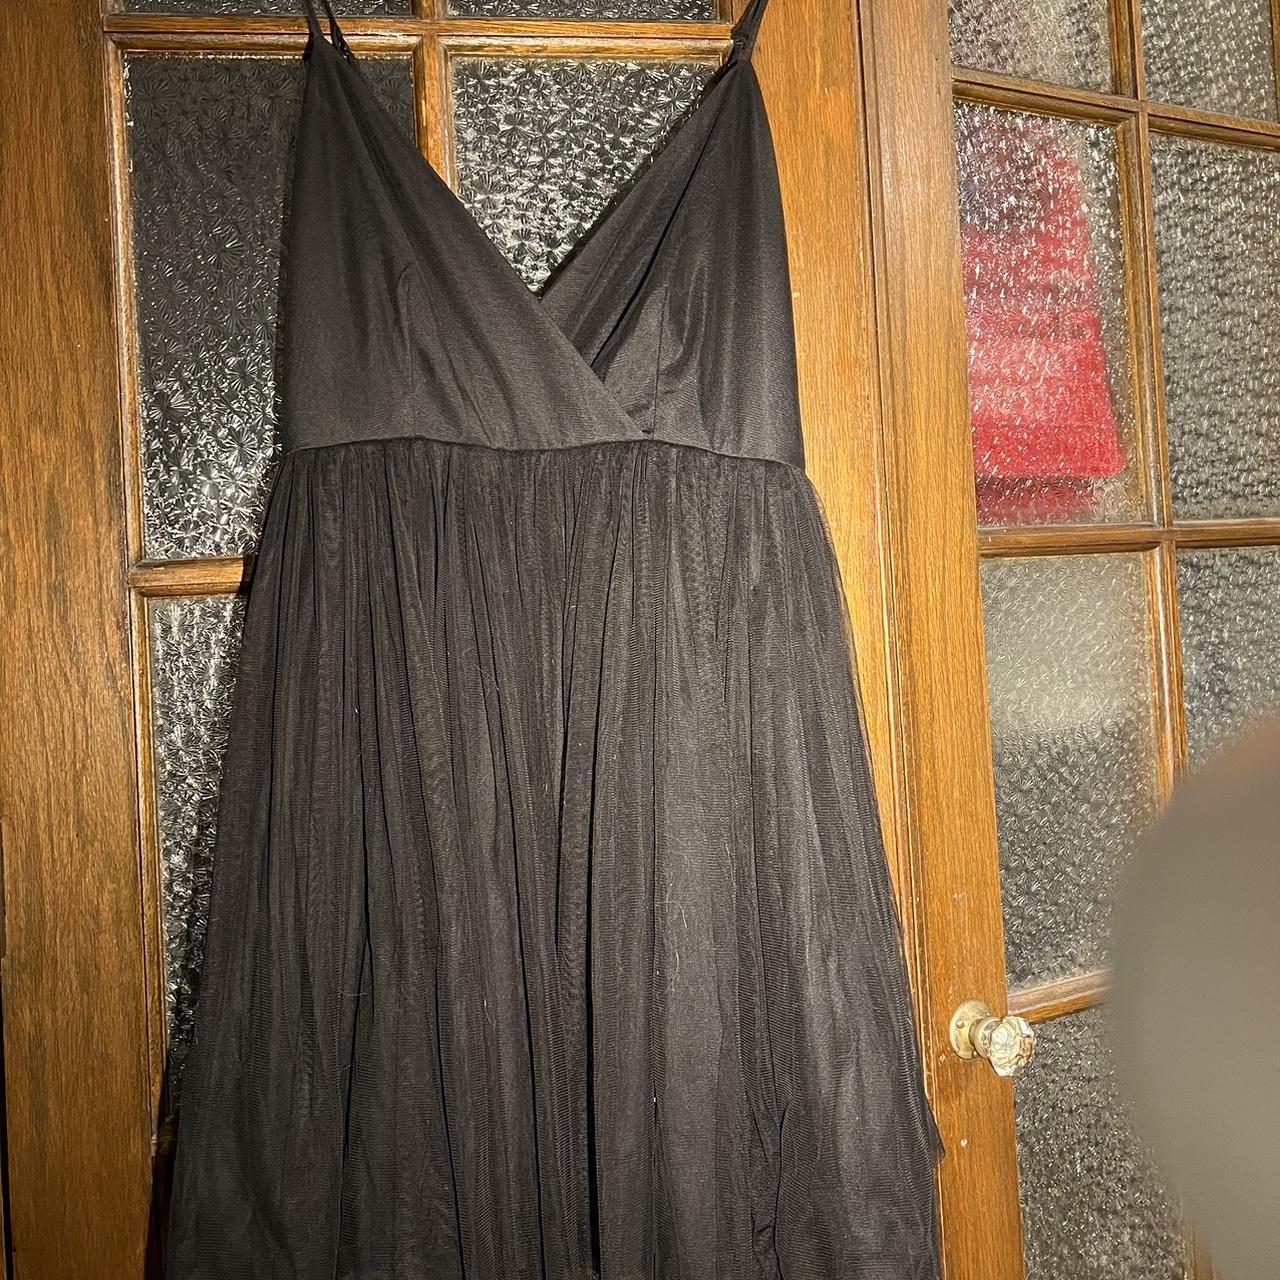 ASOS Black Tulle Mini Dress 🖤 Size US 8 or... - Depop